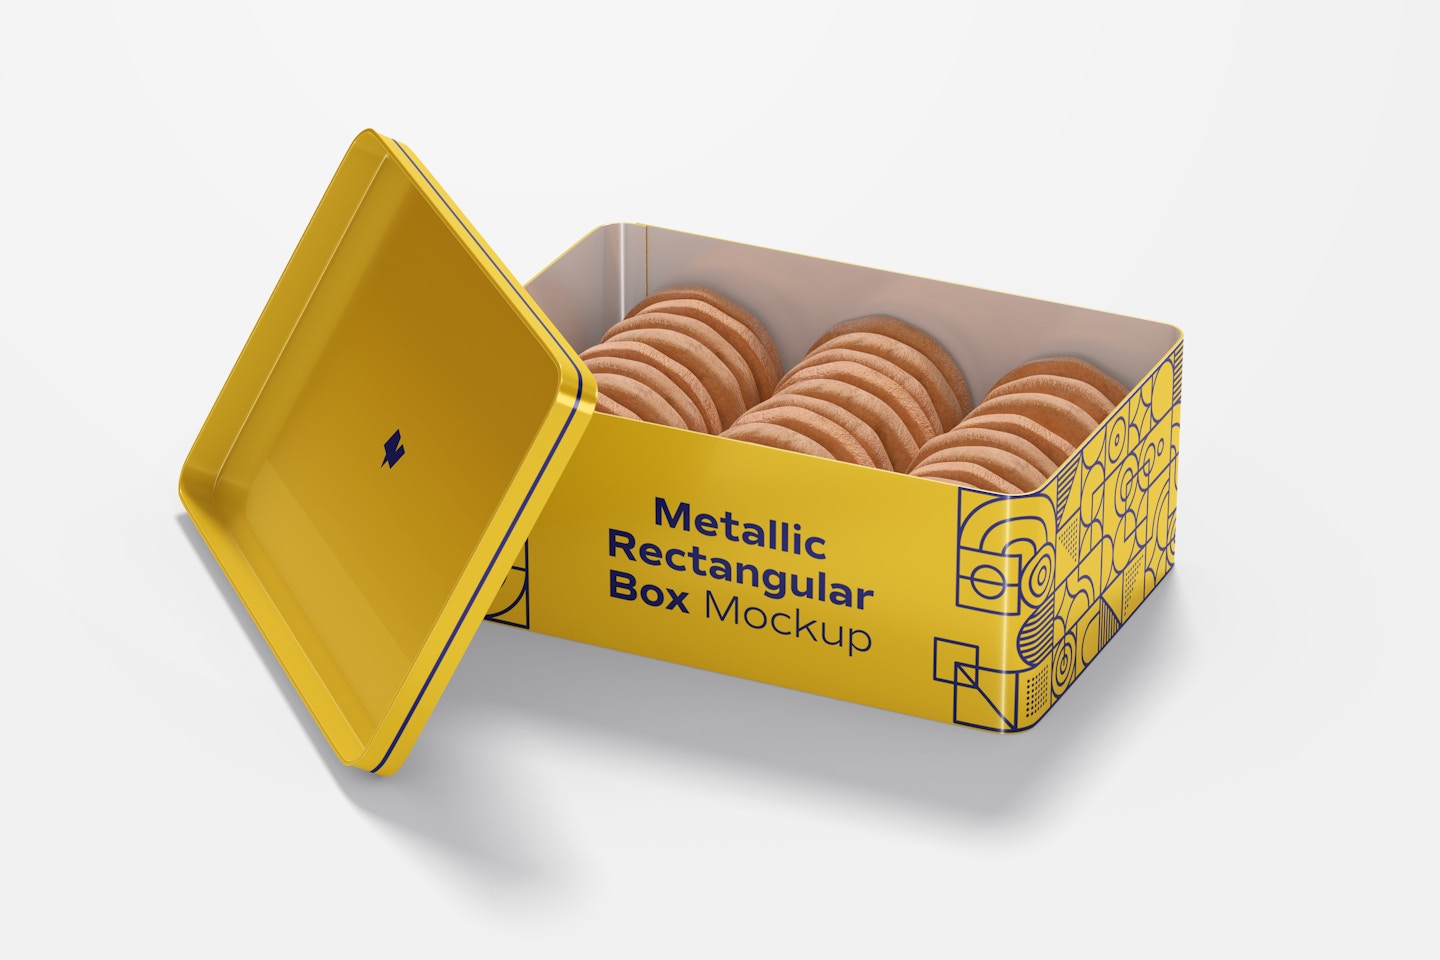 Metallic Rectangular Box Mockup, Opened